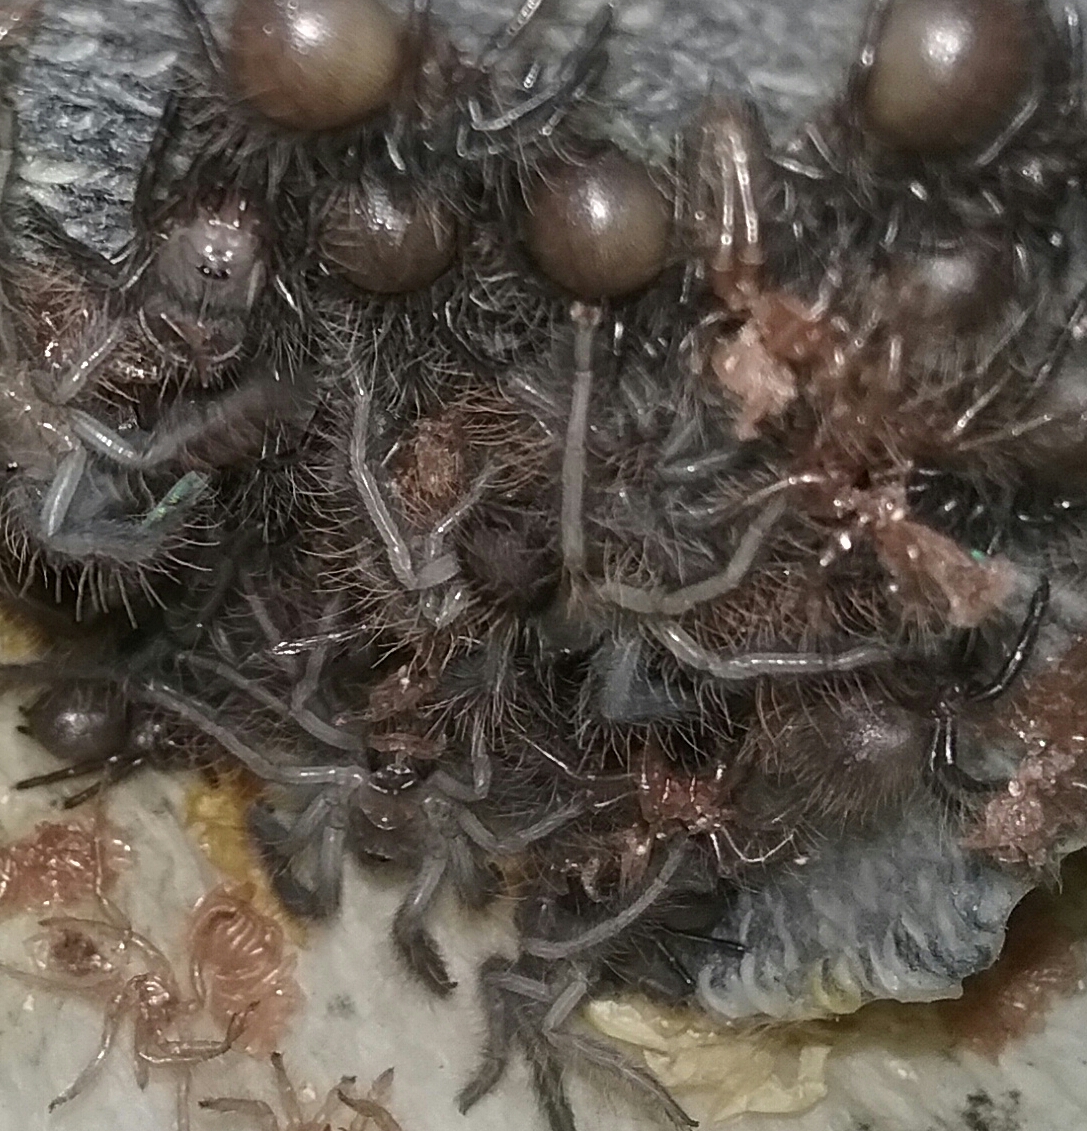 second instar schioedtei